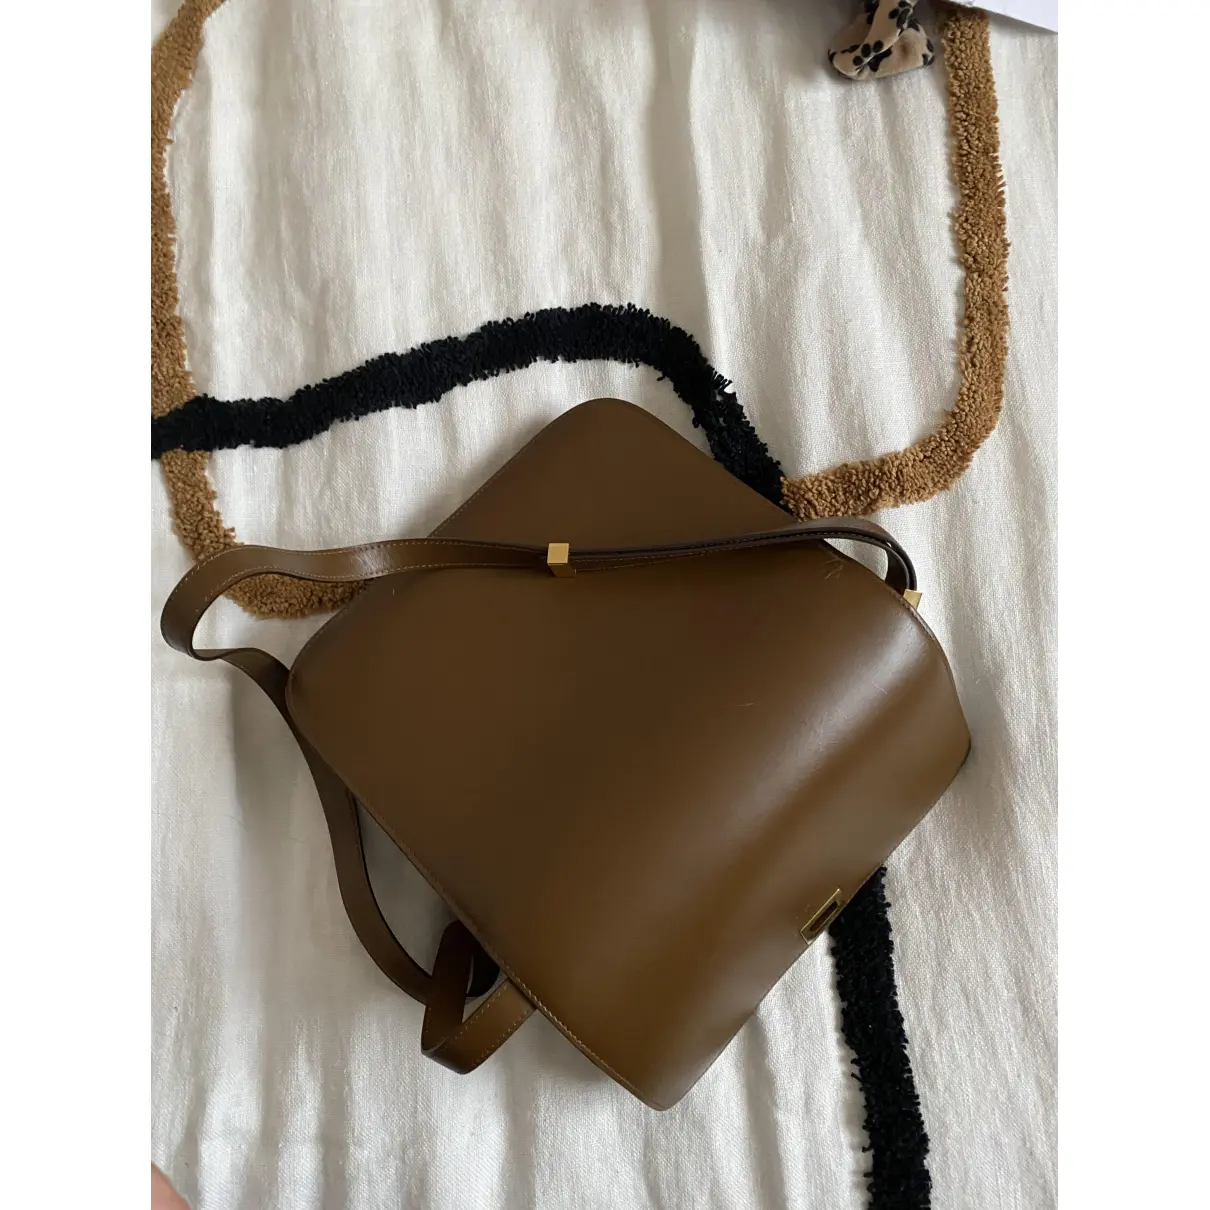 Buy Celine Classic leather crossbody bag online